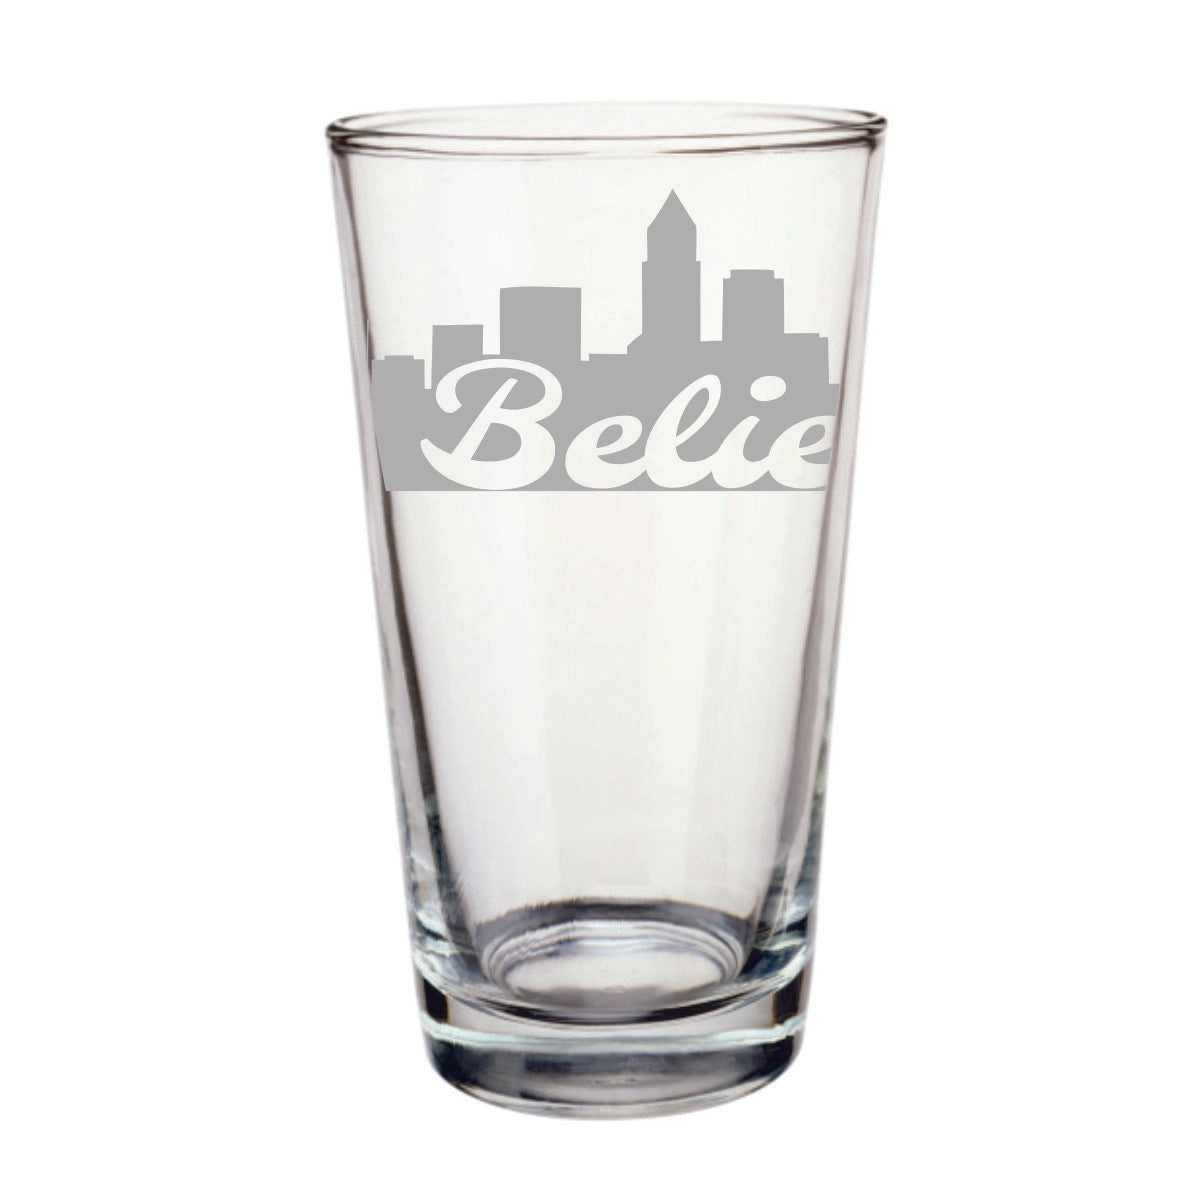 Believe Pint Glass. Cleveland, Ohio. Believeland